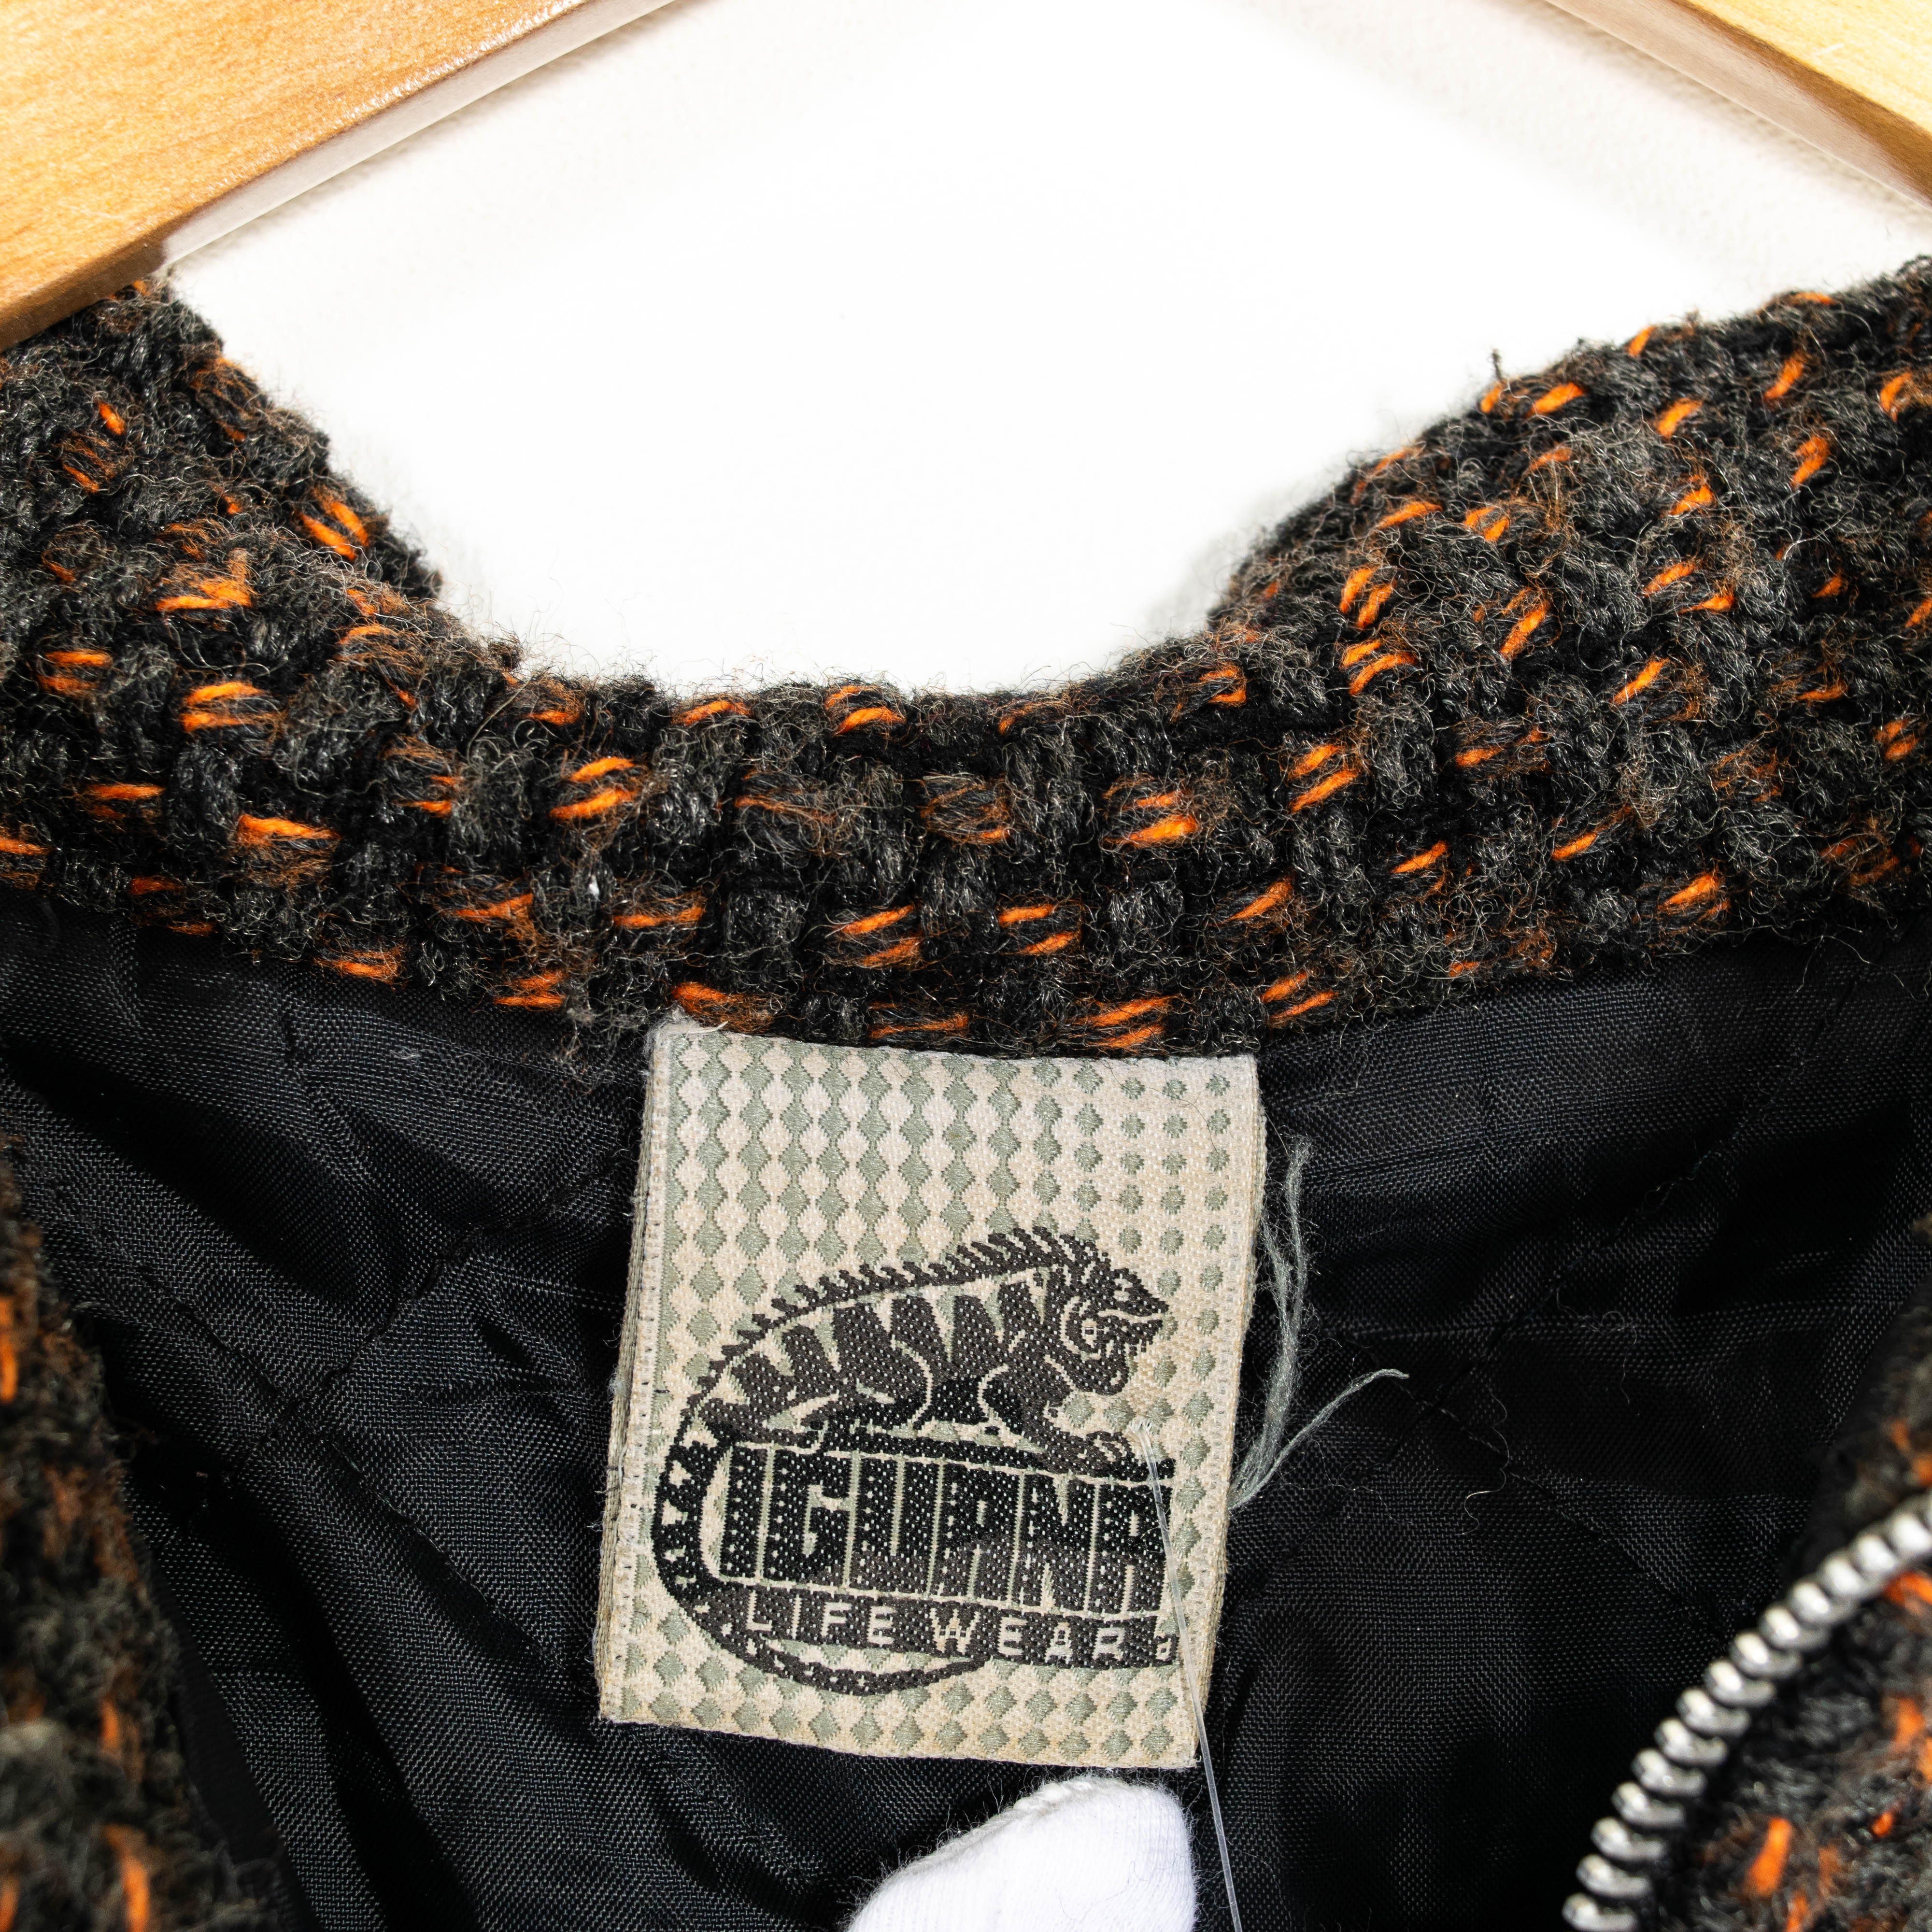 Vintage Iguana Brown Quarter Zip Pullover Wool Blend Sweater Logo Patch Mens XL